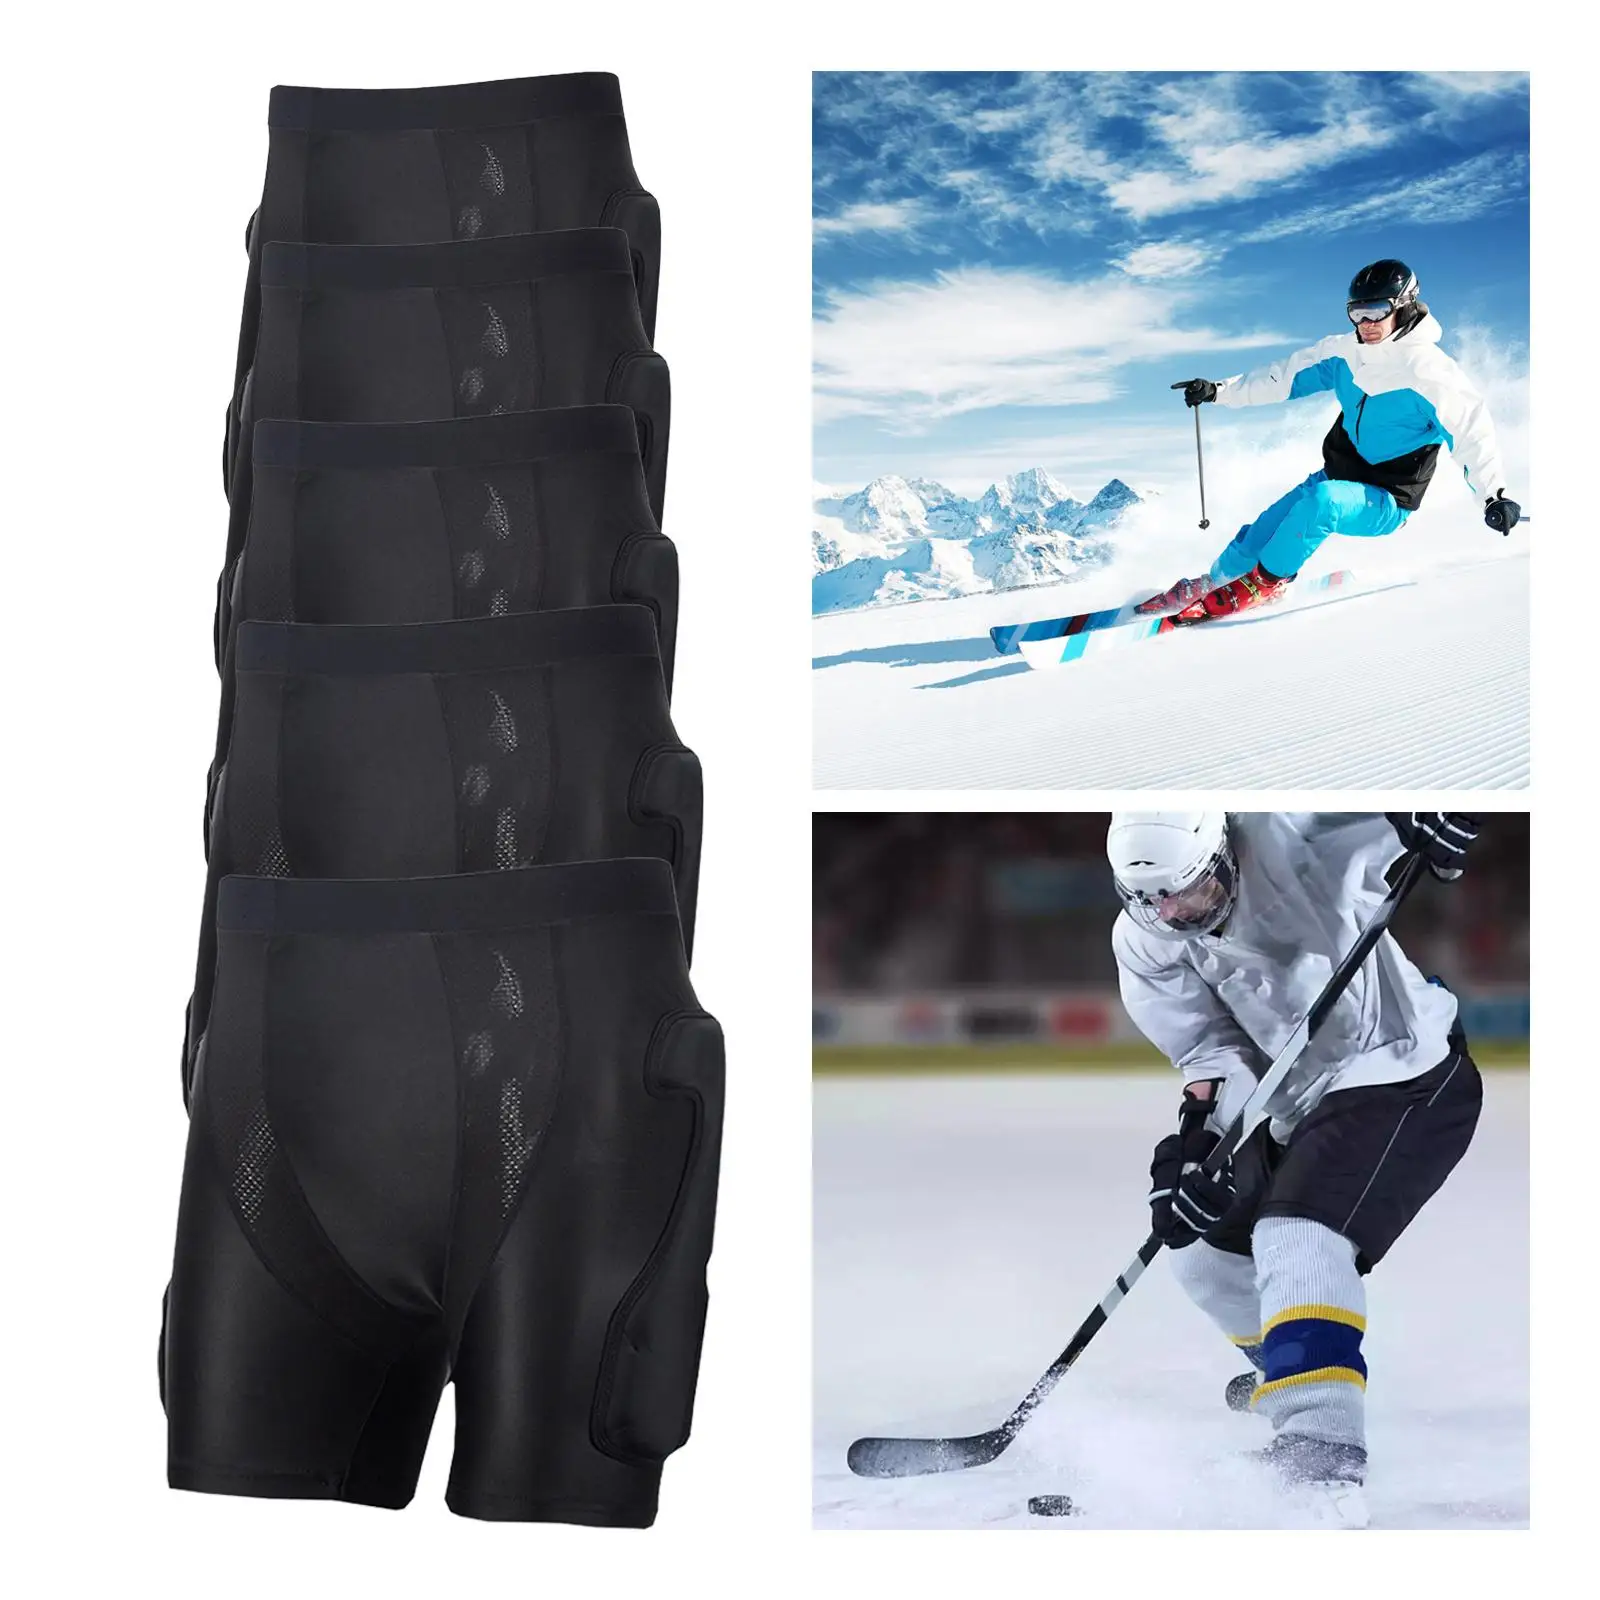 Protective Padded Shorts Pants Sports Ski Hip Pad Impact Resistance Pad Impact Pad for Riding Skate Ski Black Adults Teens